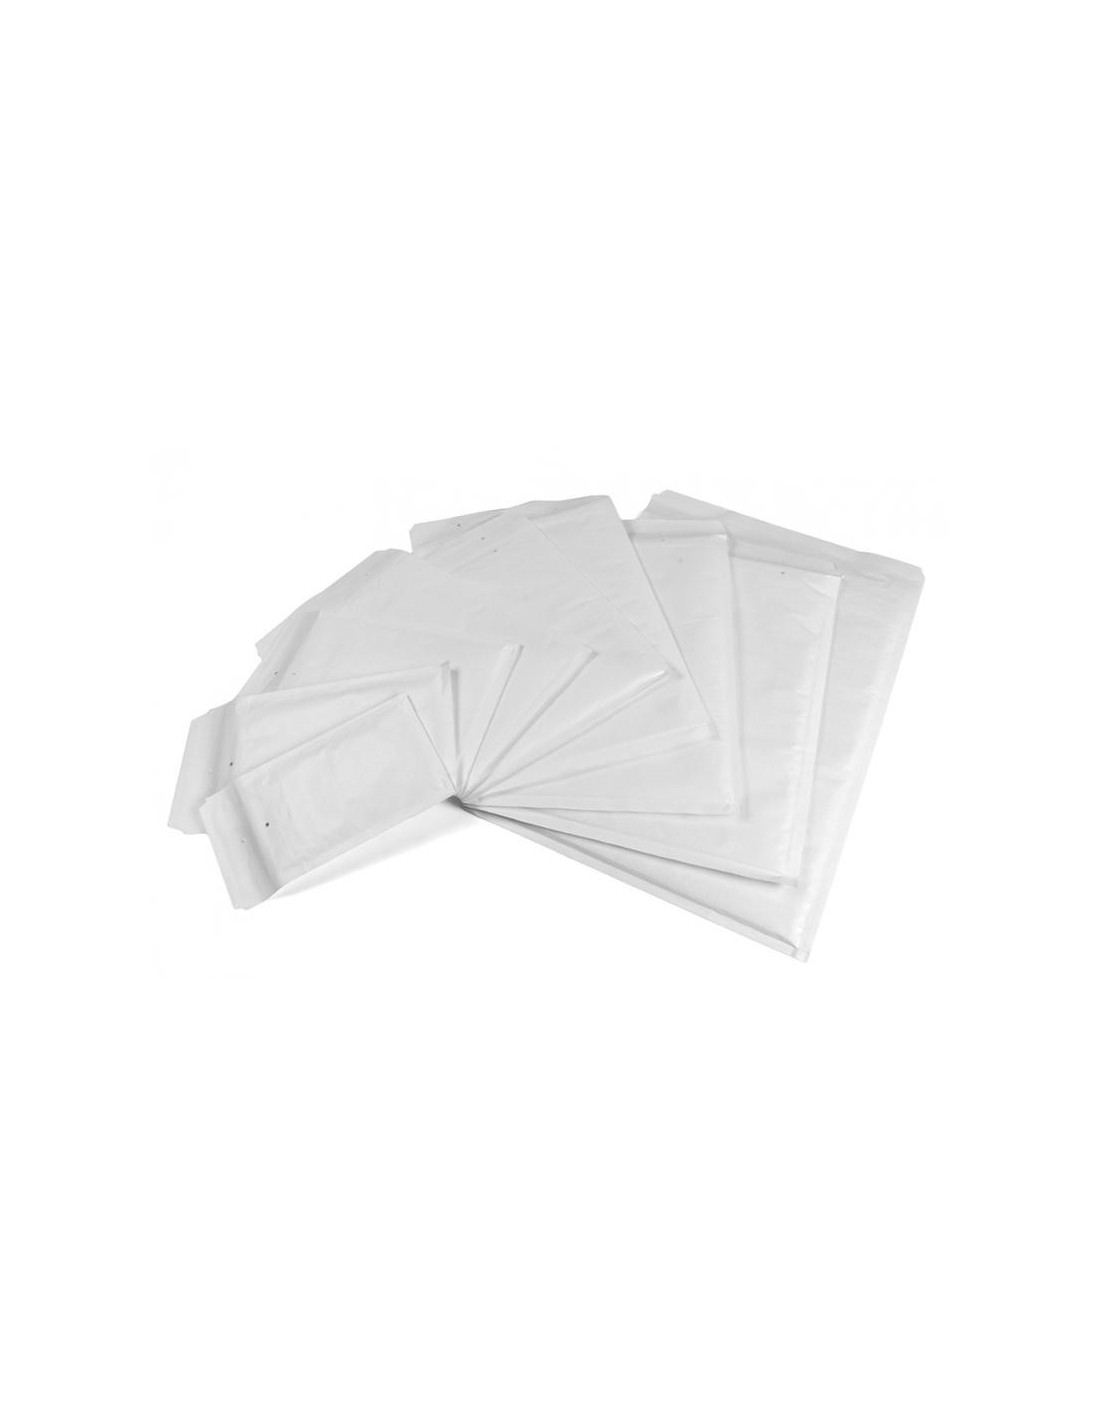 50 x Pochette plastique opaque / Enveloppes opaques / webshopbags B